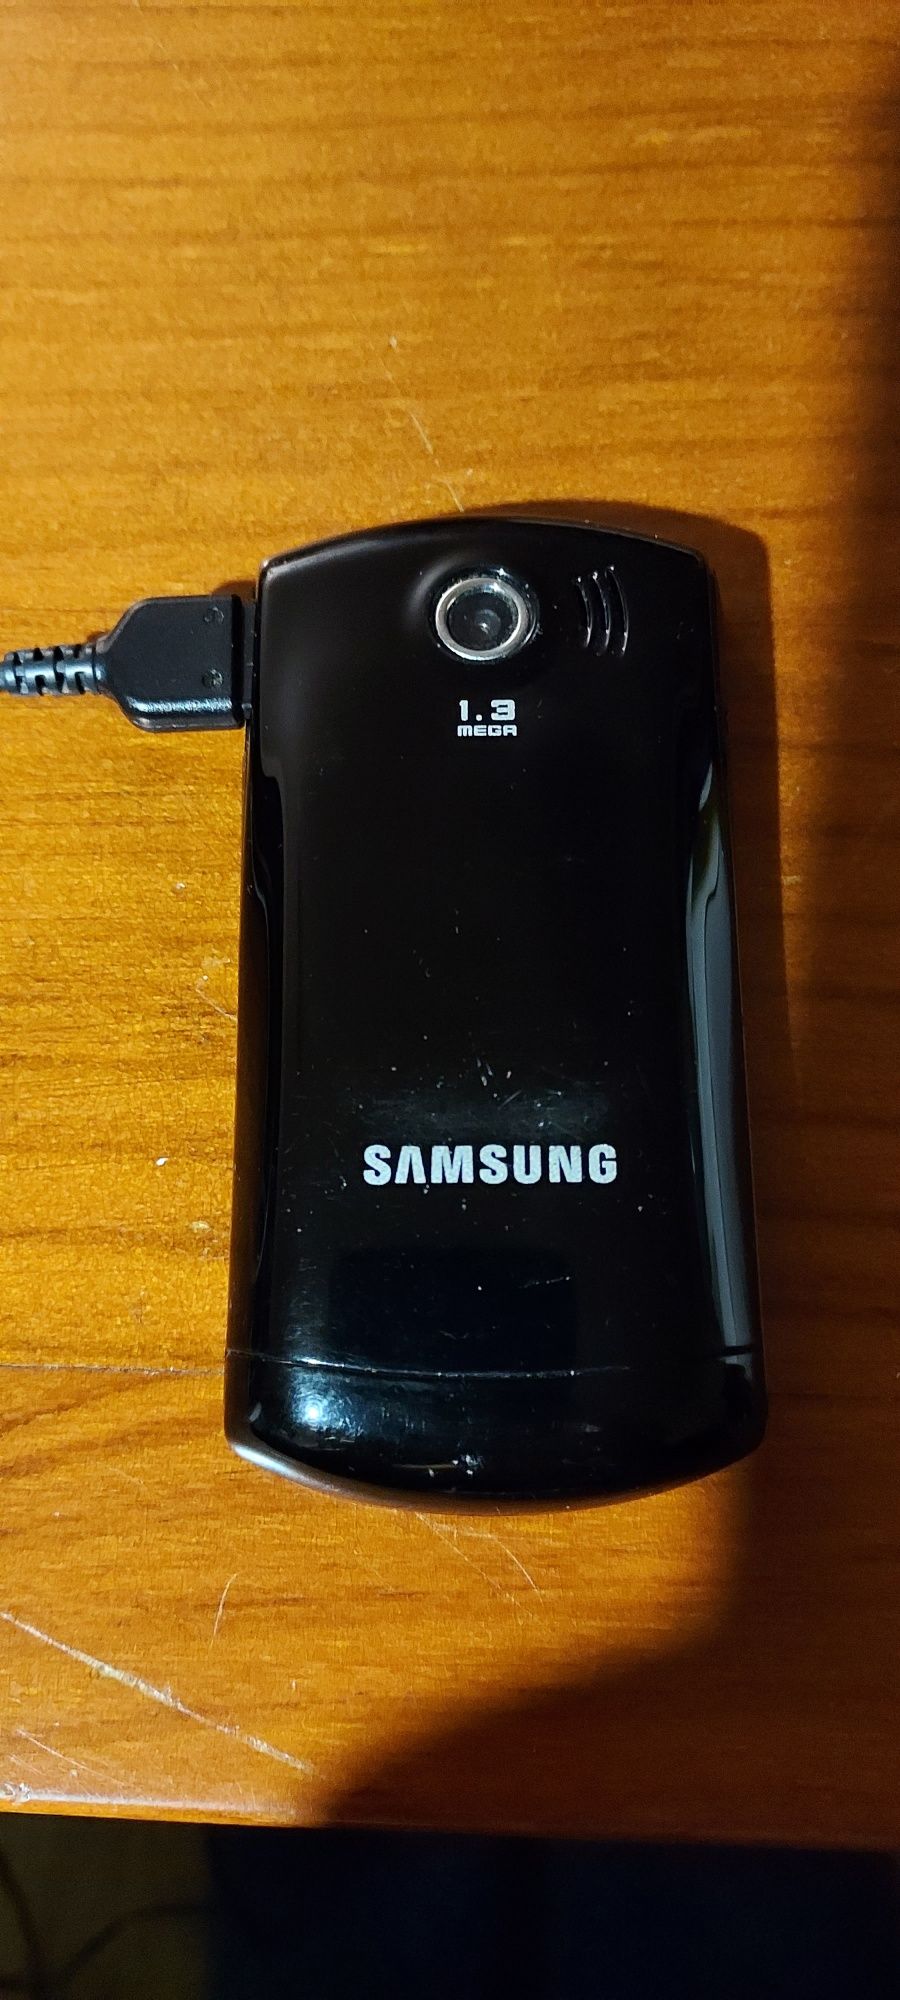 Telemóvel Samsung GT-E2550